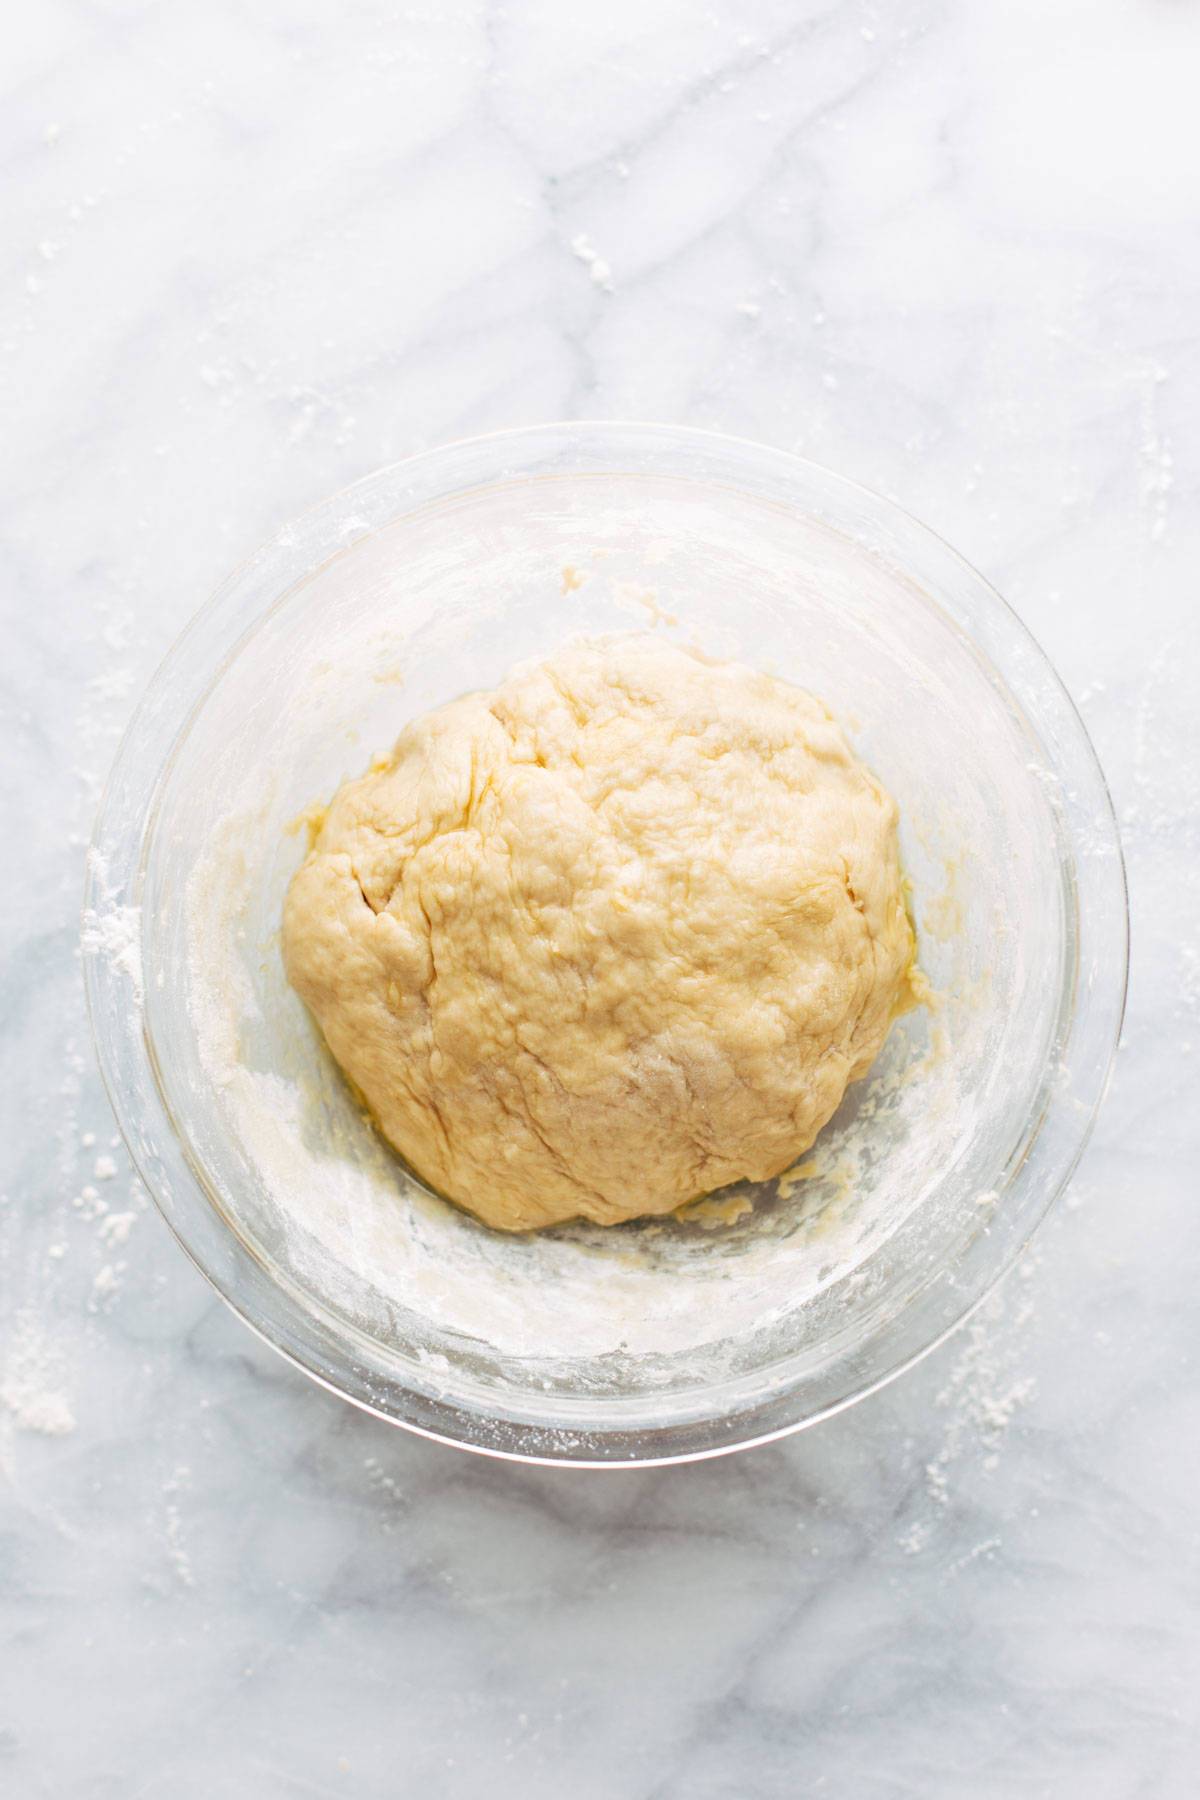 Dough for Basic Soft Pretzels uncovered in bowl.